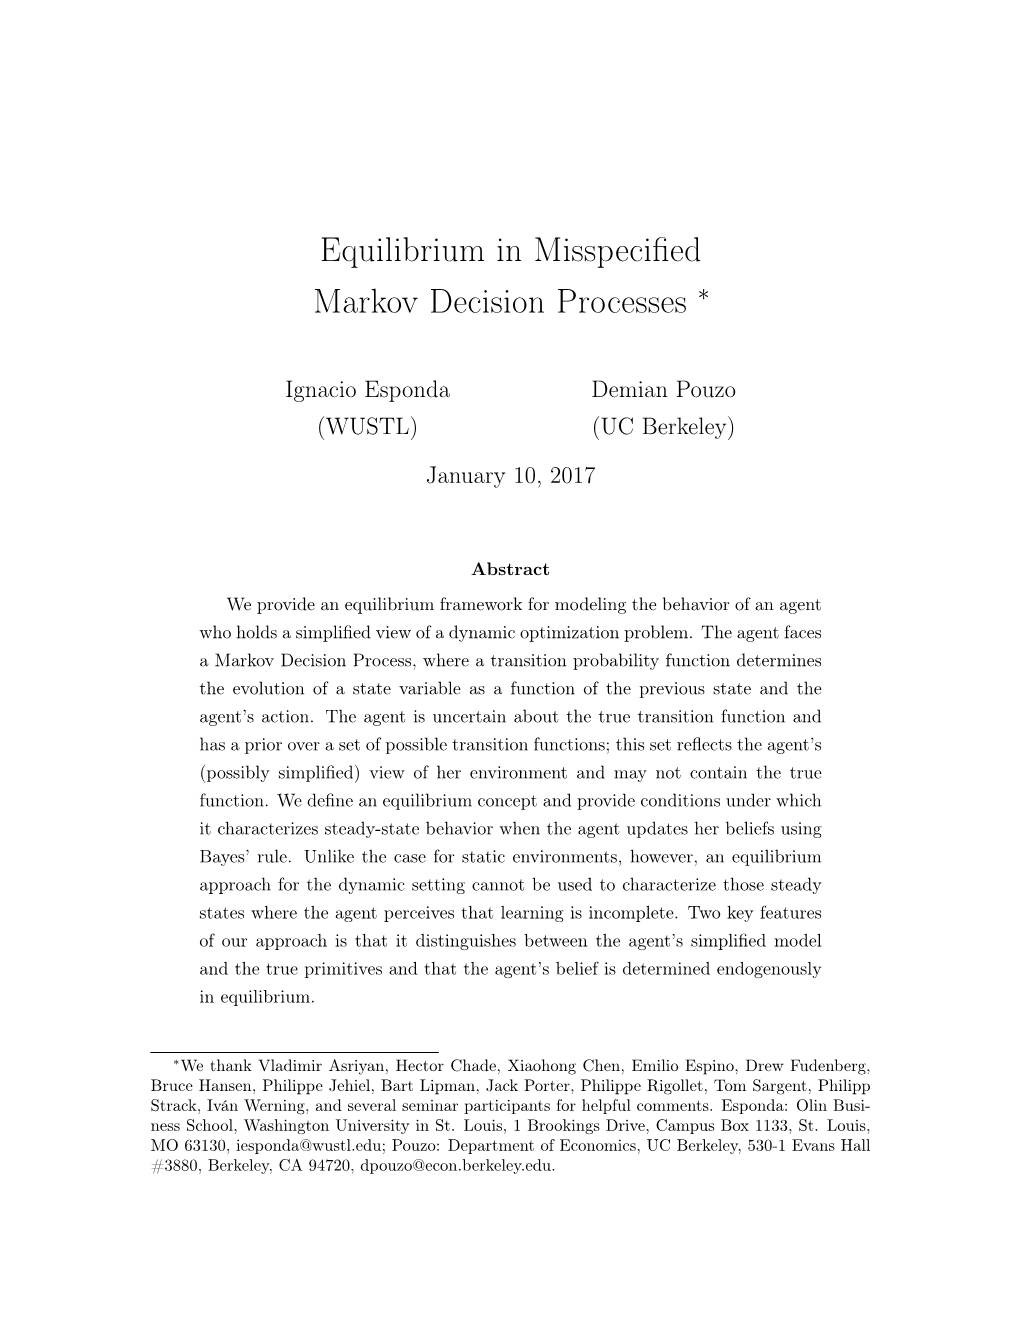 Equilibrium in Misspecified Markov Decision